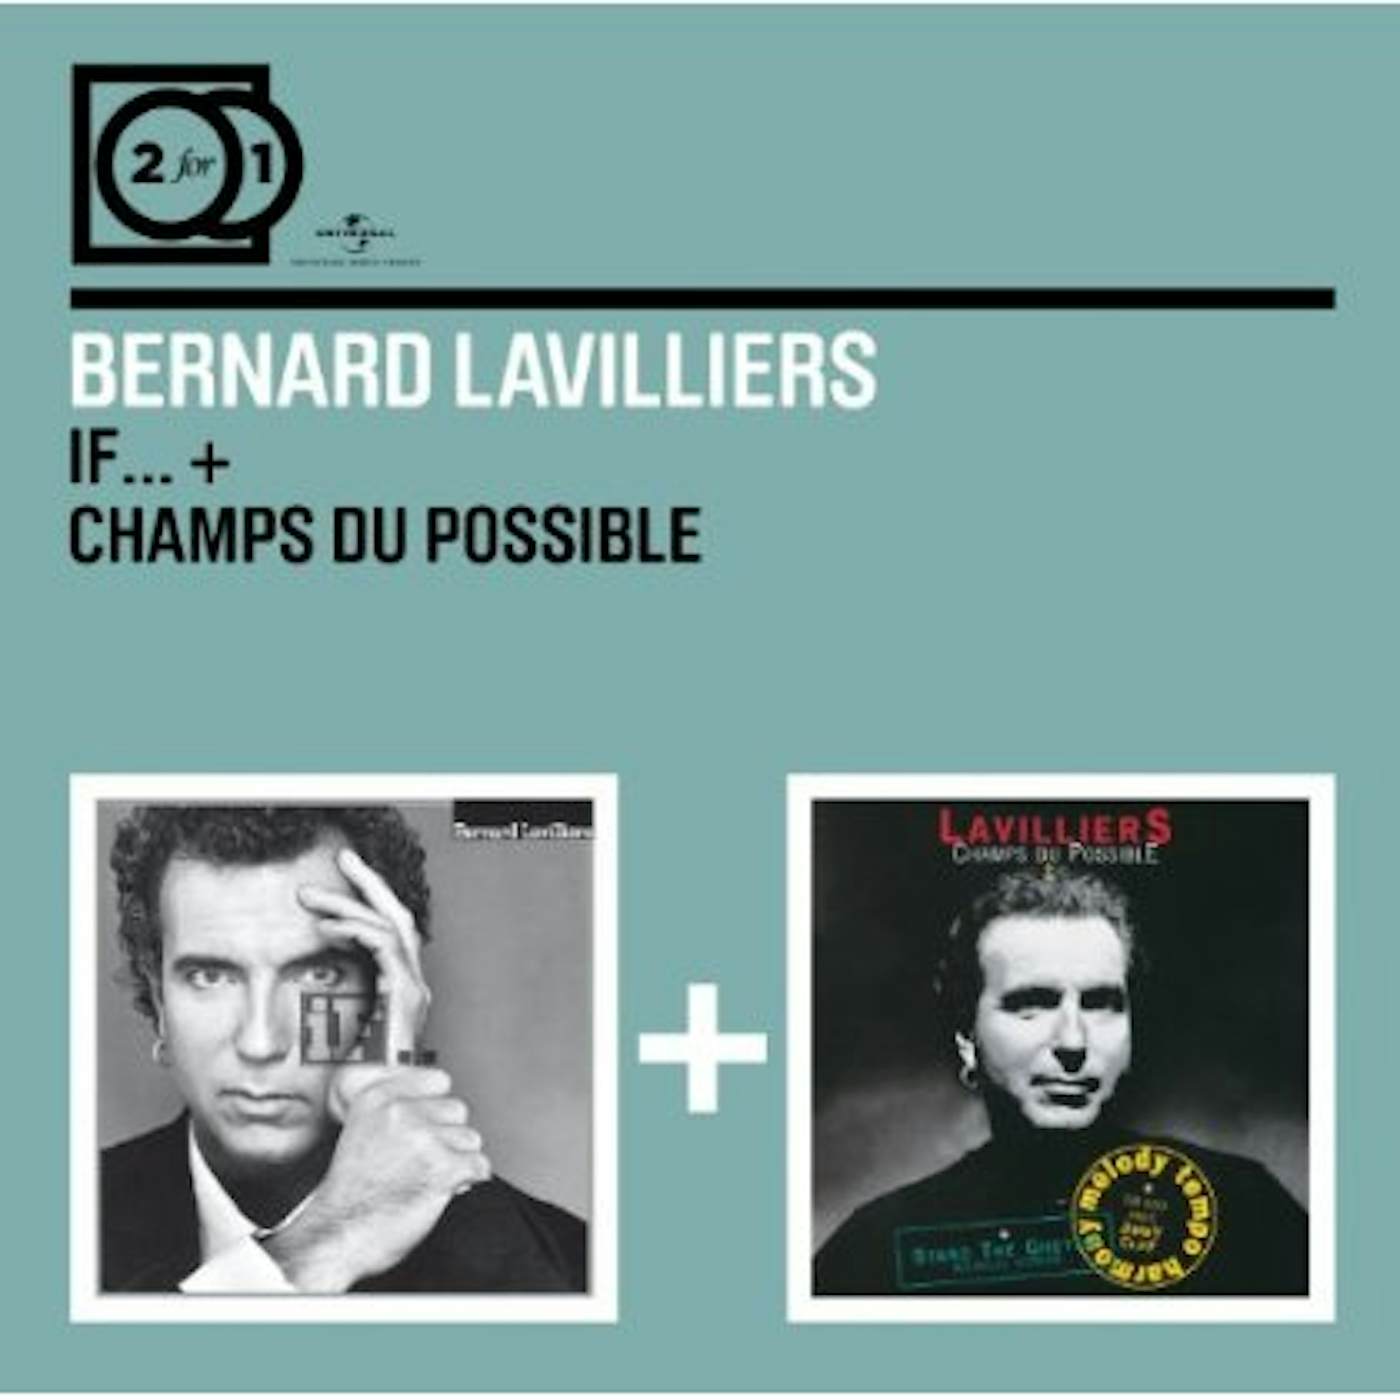 Bernard Lavilliers IF/CHAMPS DU POSSIBLE CD